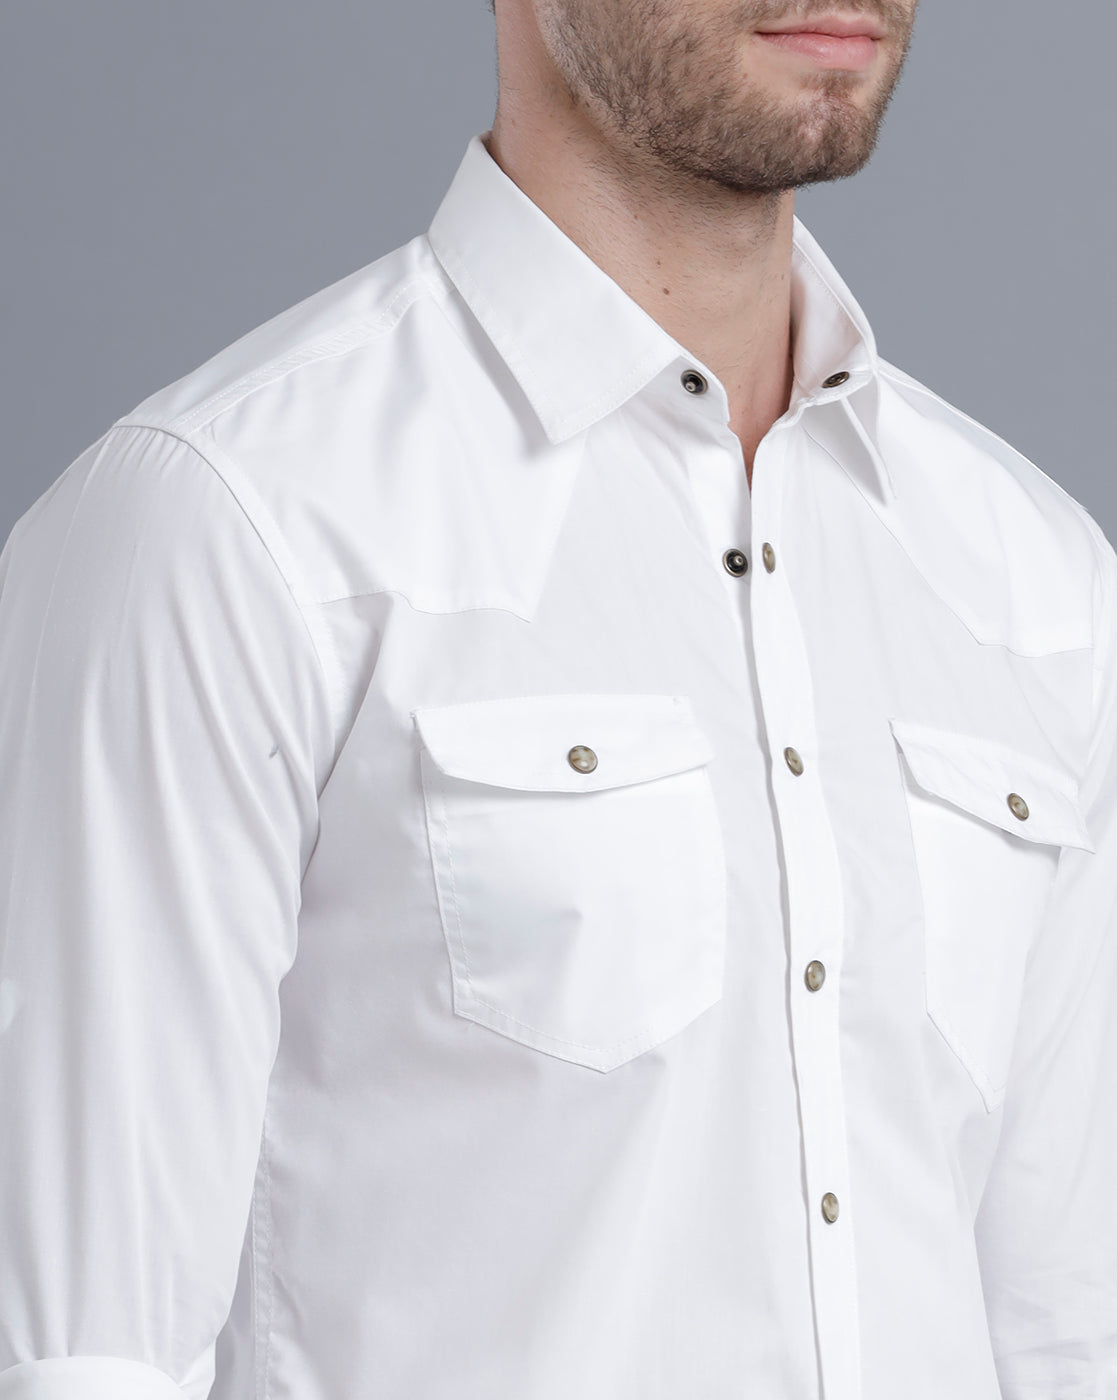 Slim fit white shirt